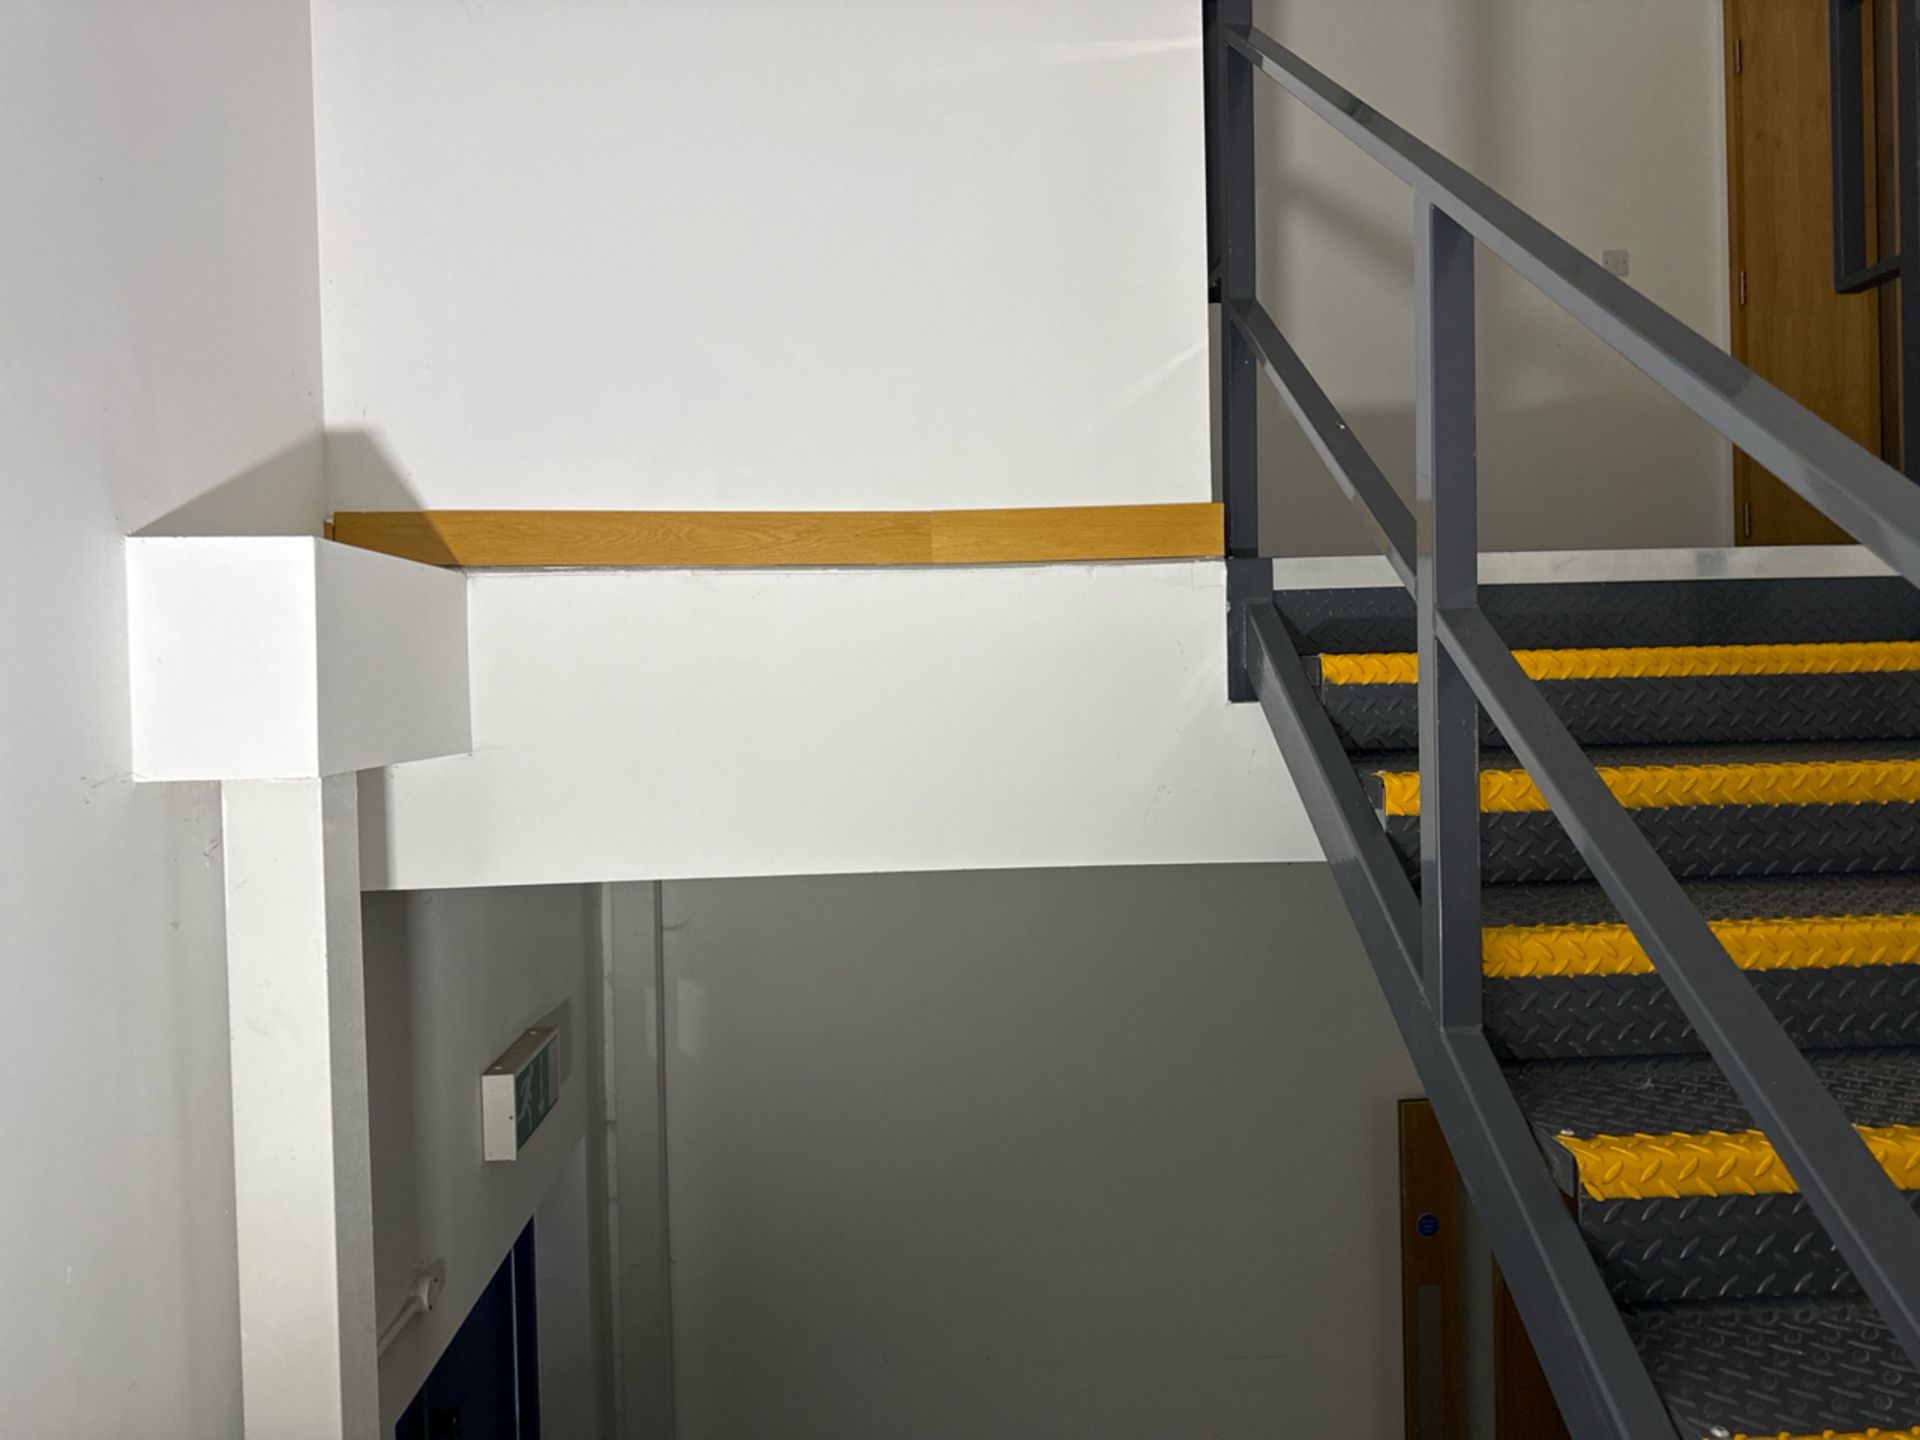 Mezzanine Floor and Stairs